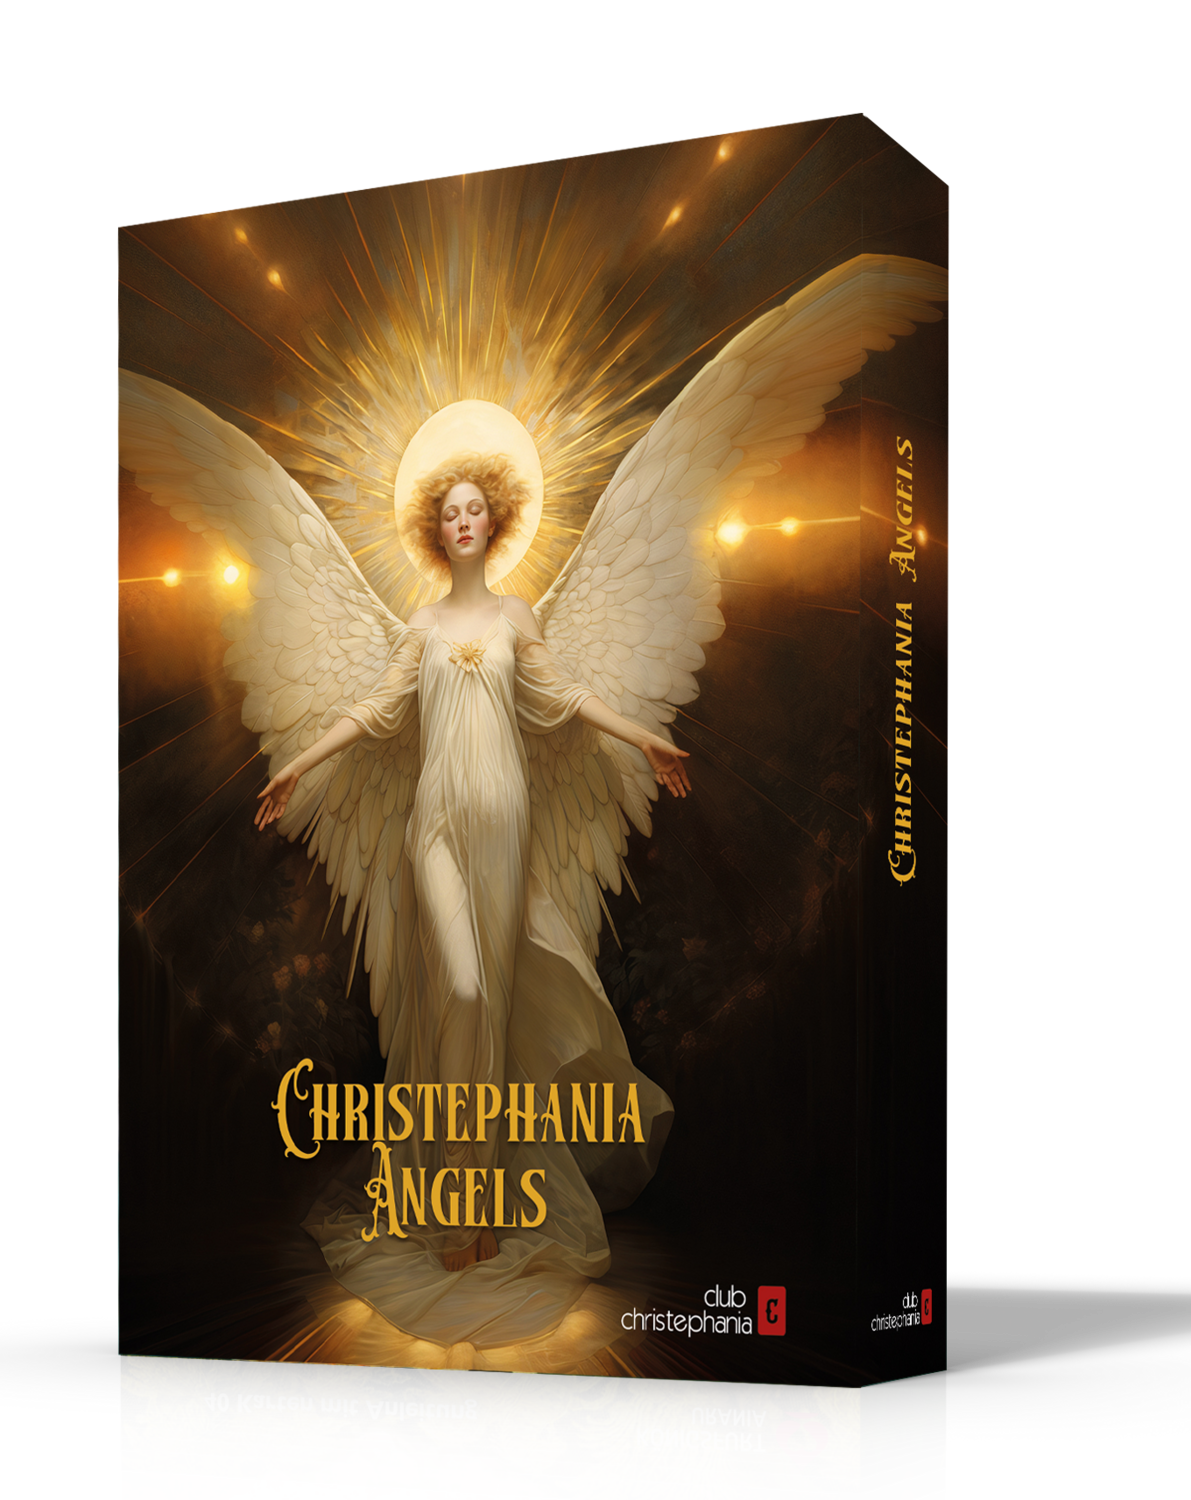 Christephania Angels